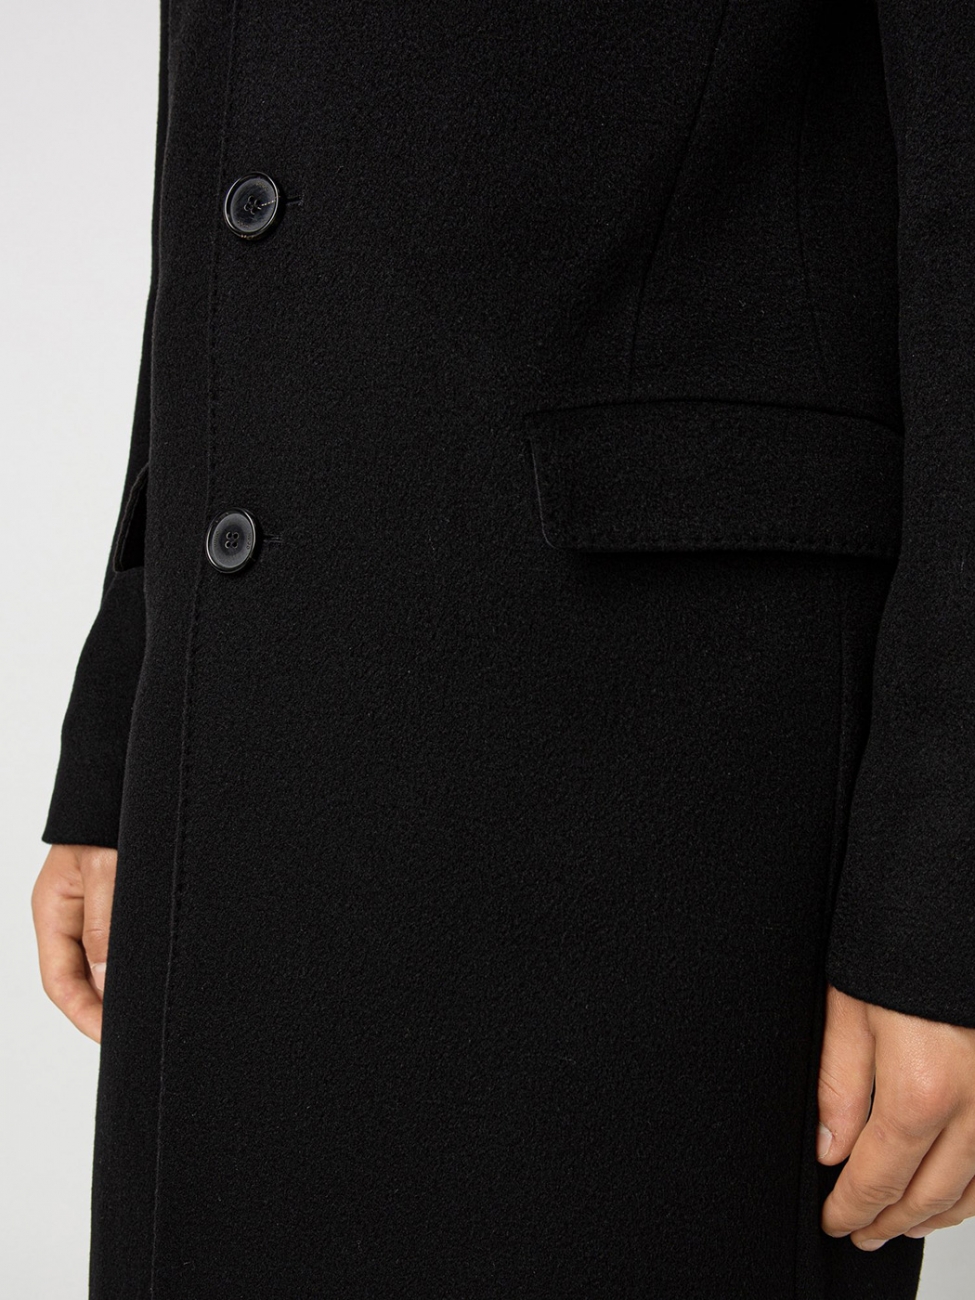 Boutique HUGO BOSS MIGOR Men's black cashmere long coat price €750 Size 48